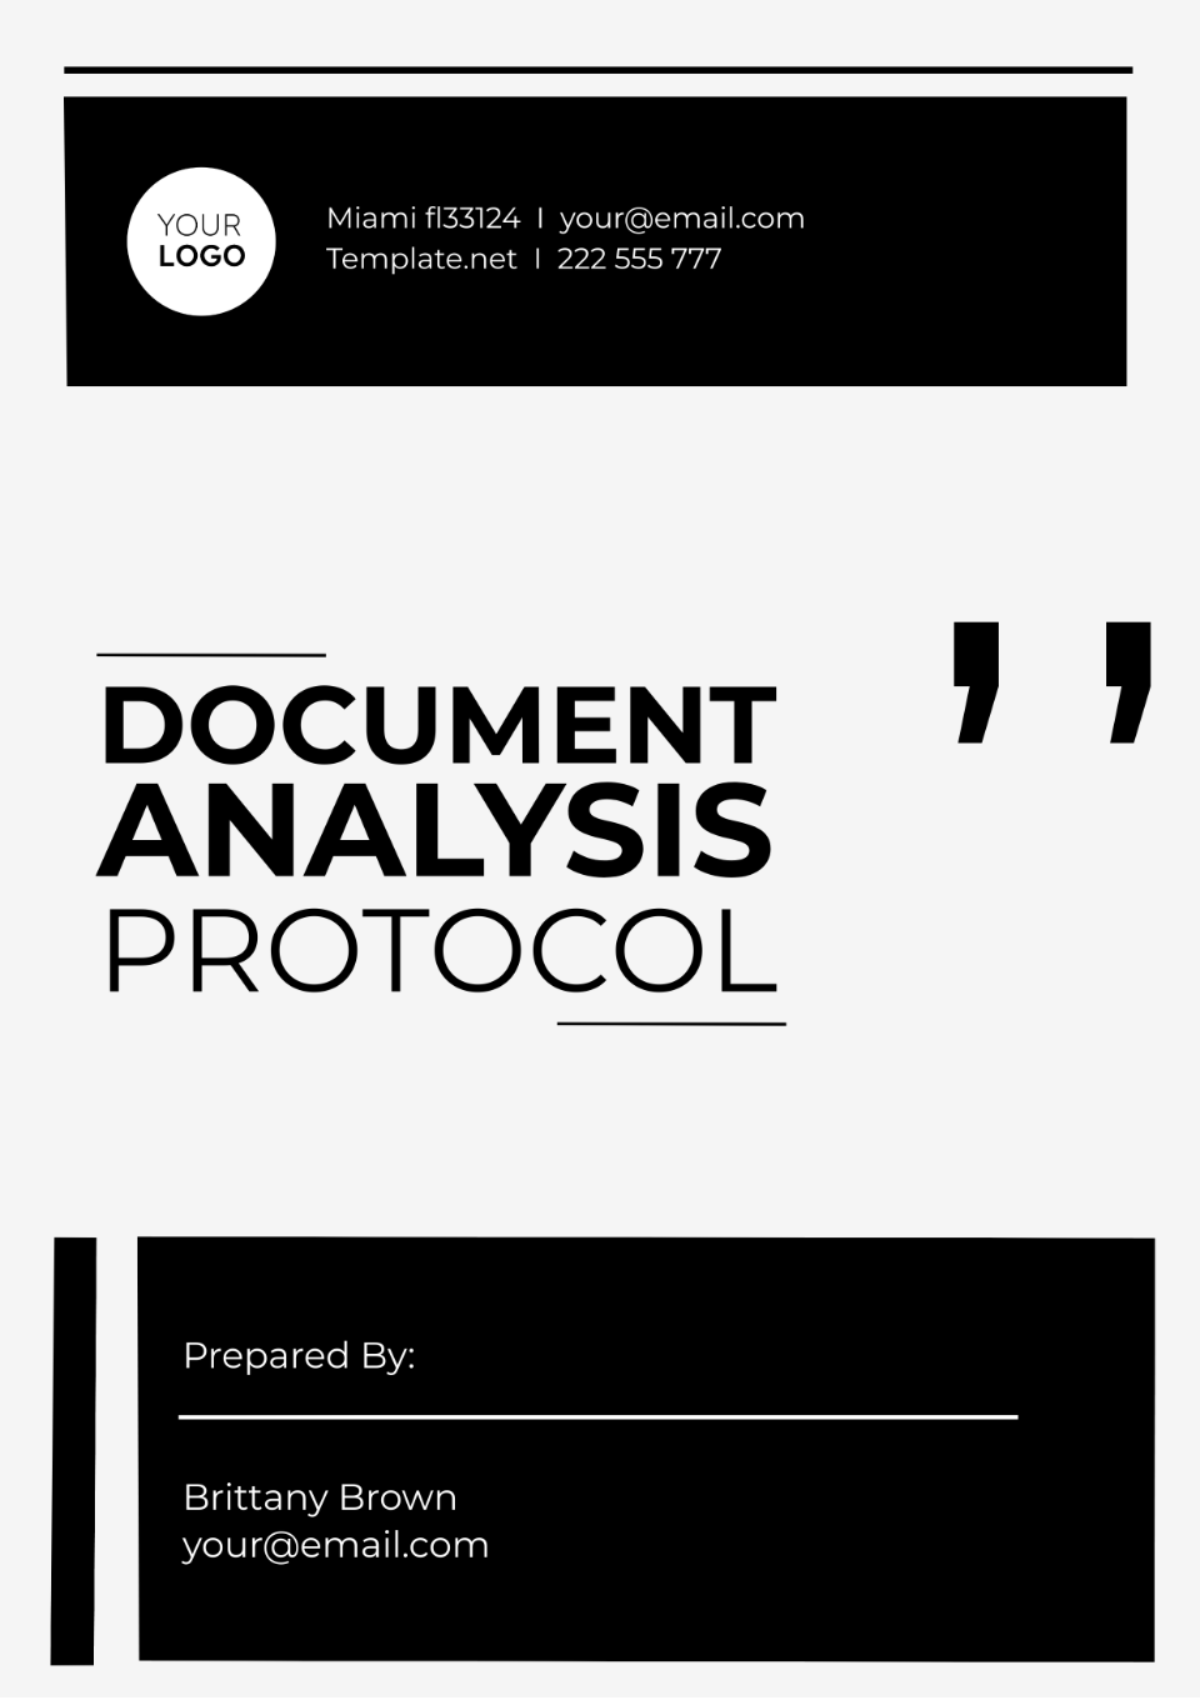 Document Analysis Protocol Template